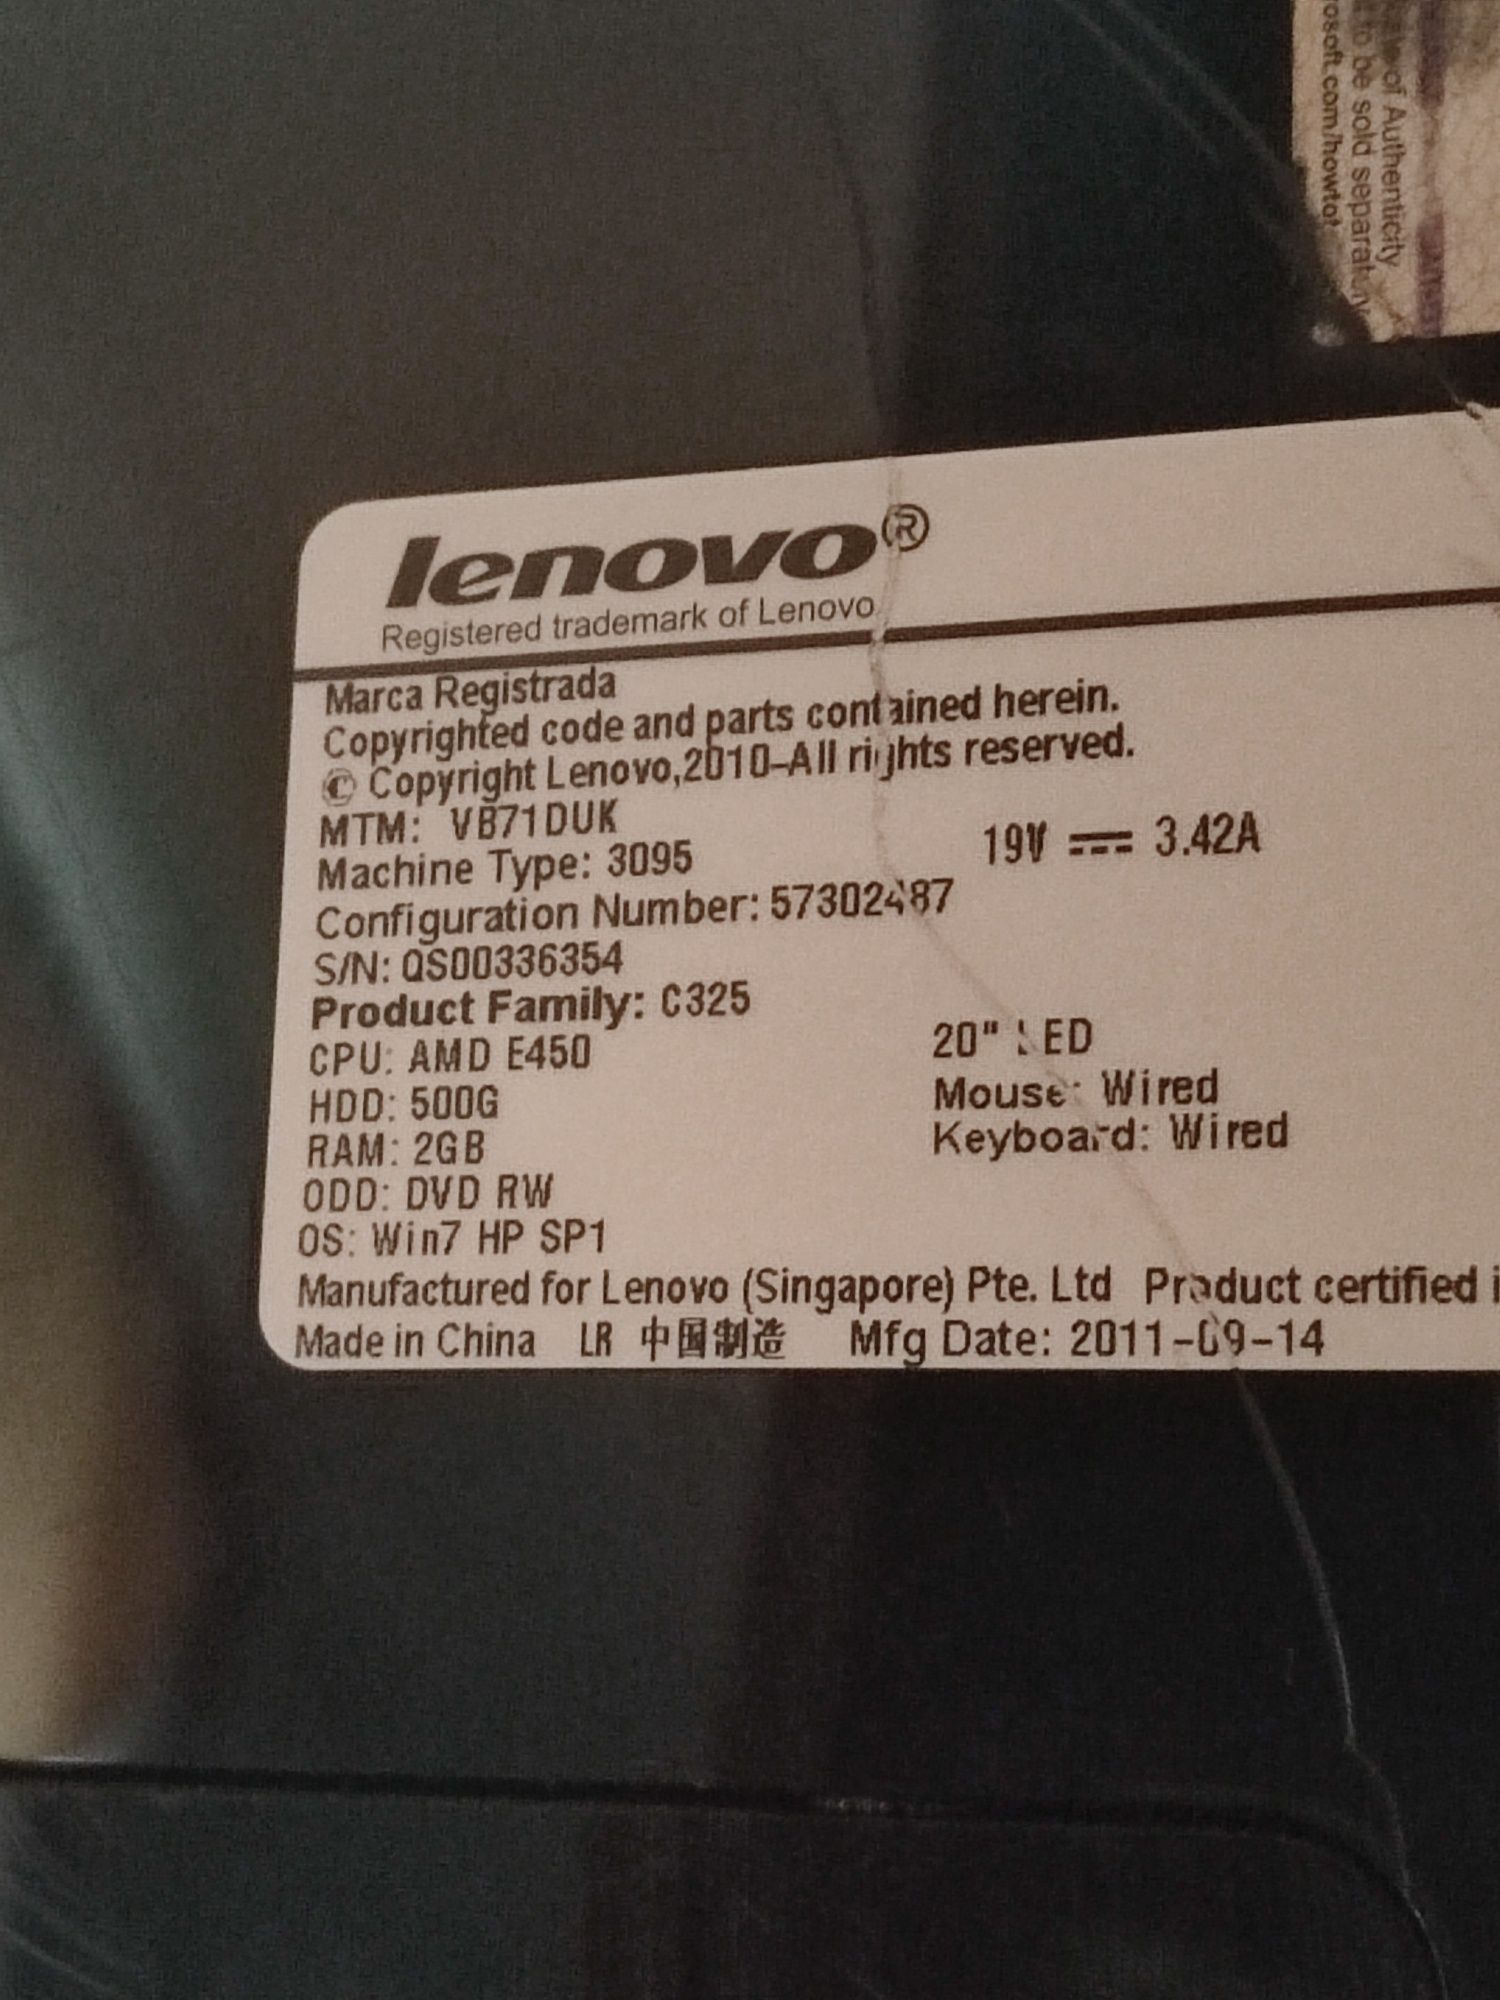 Lenovo c325 AMD 450